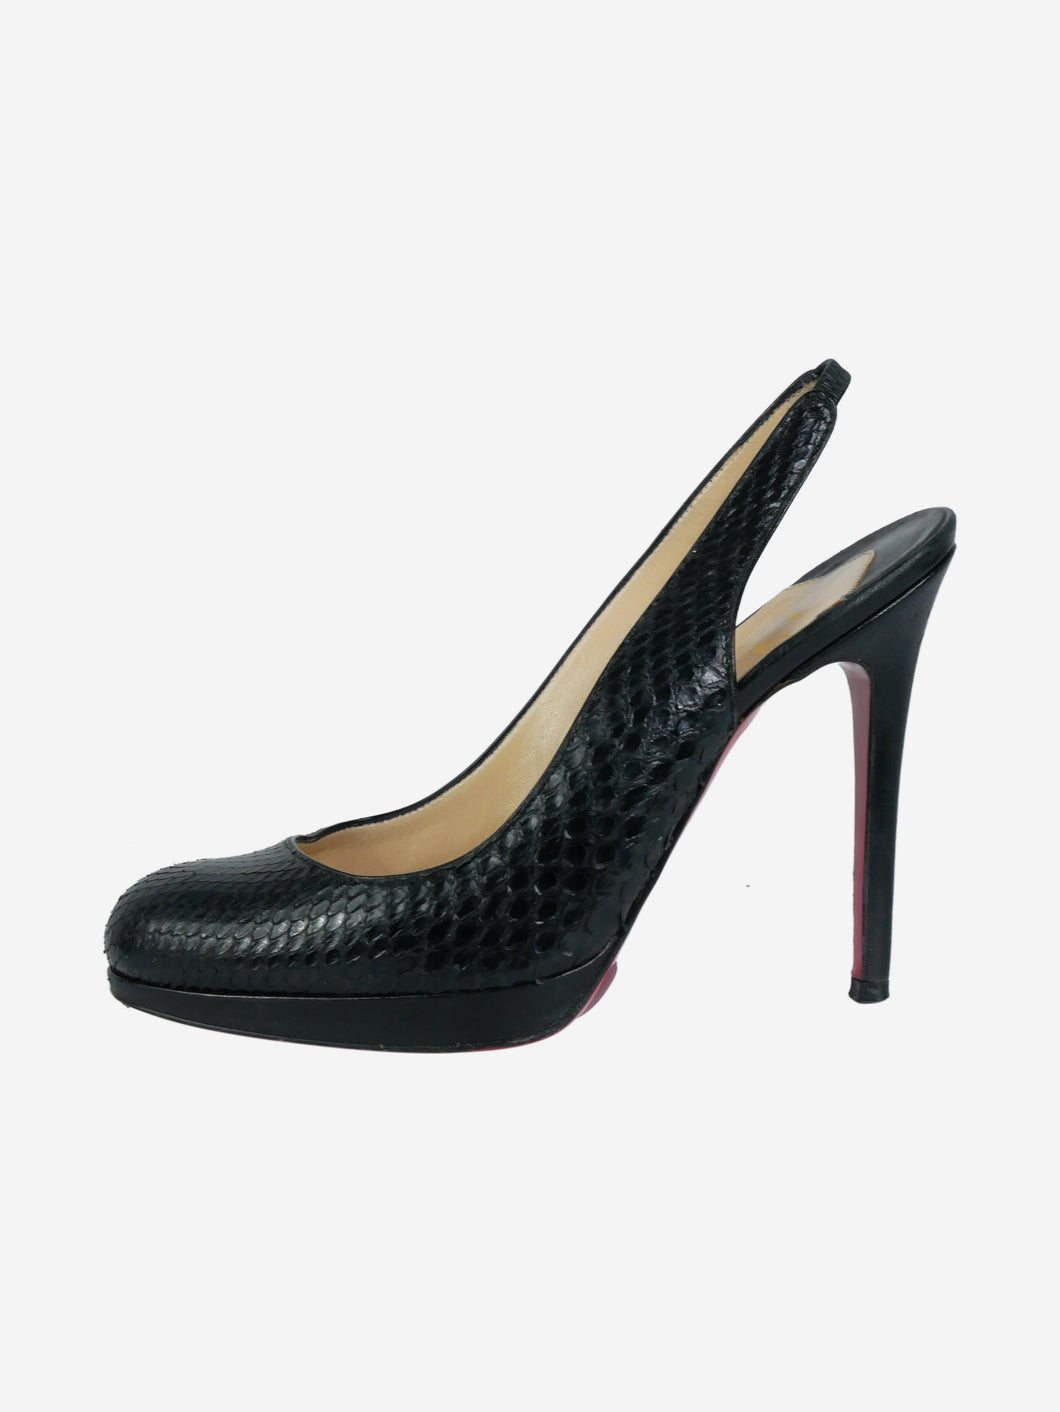 Black snake effect platform with stiletto heel - size EU 36 Heels Christian Louboutin 